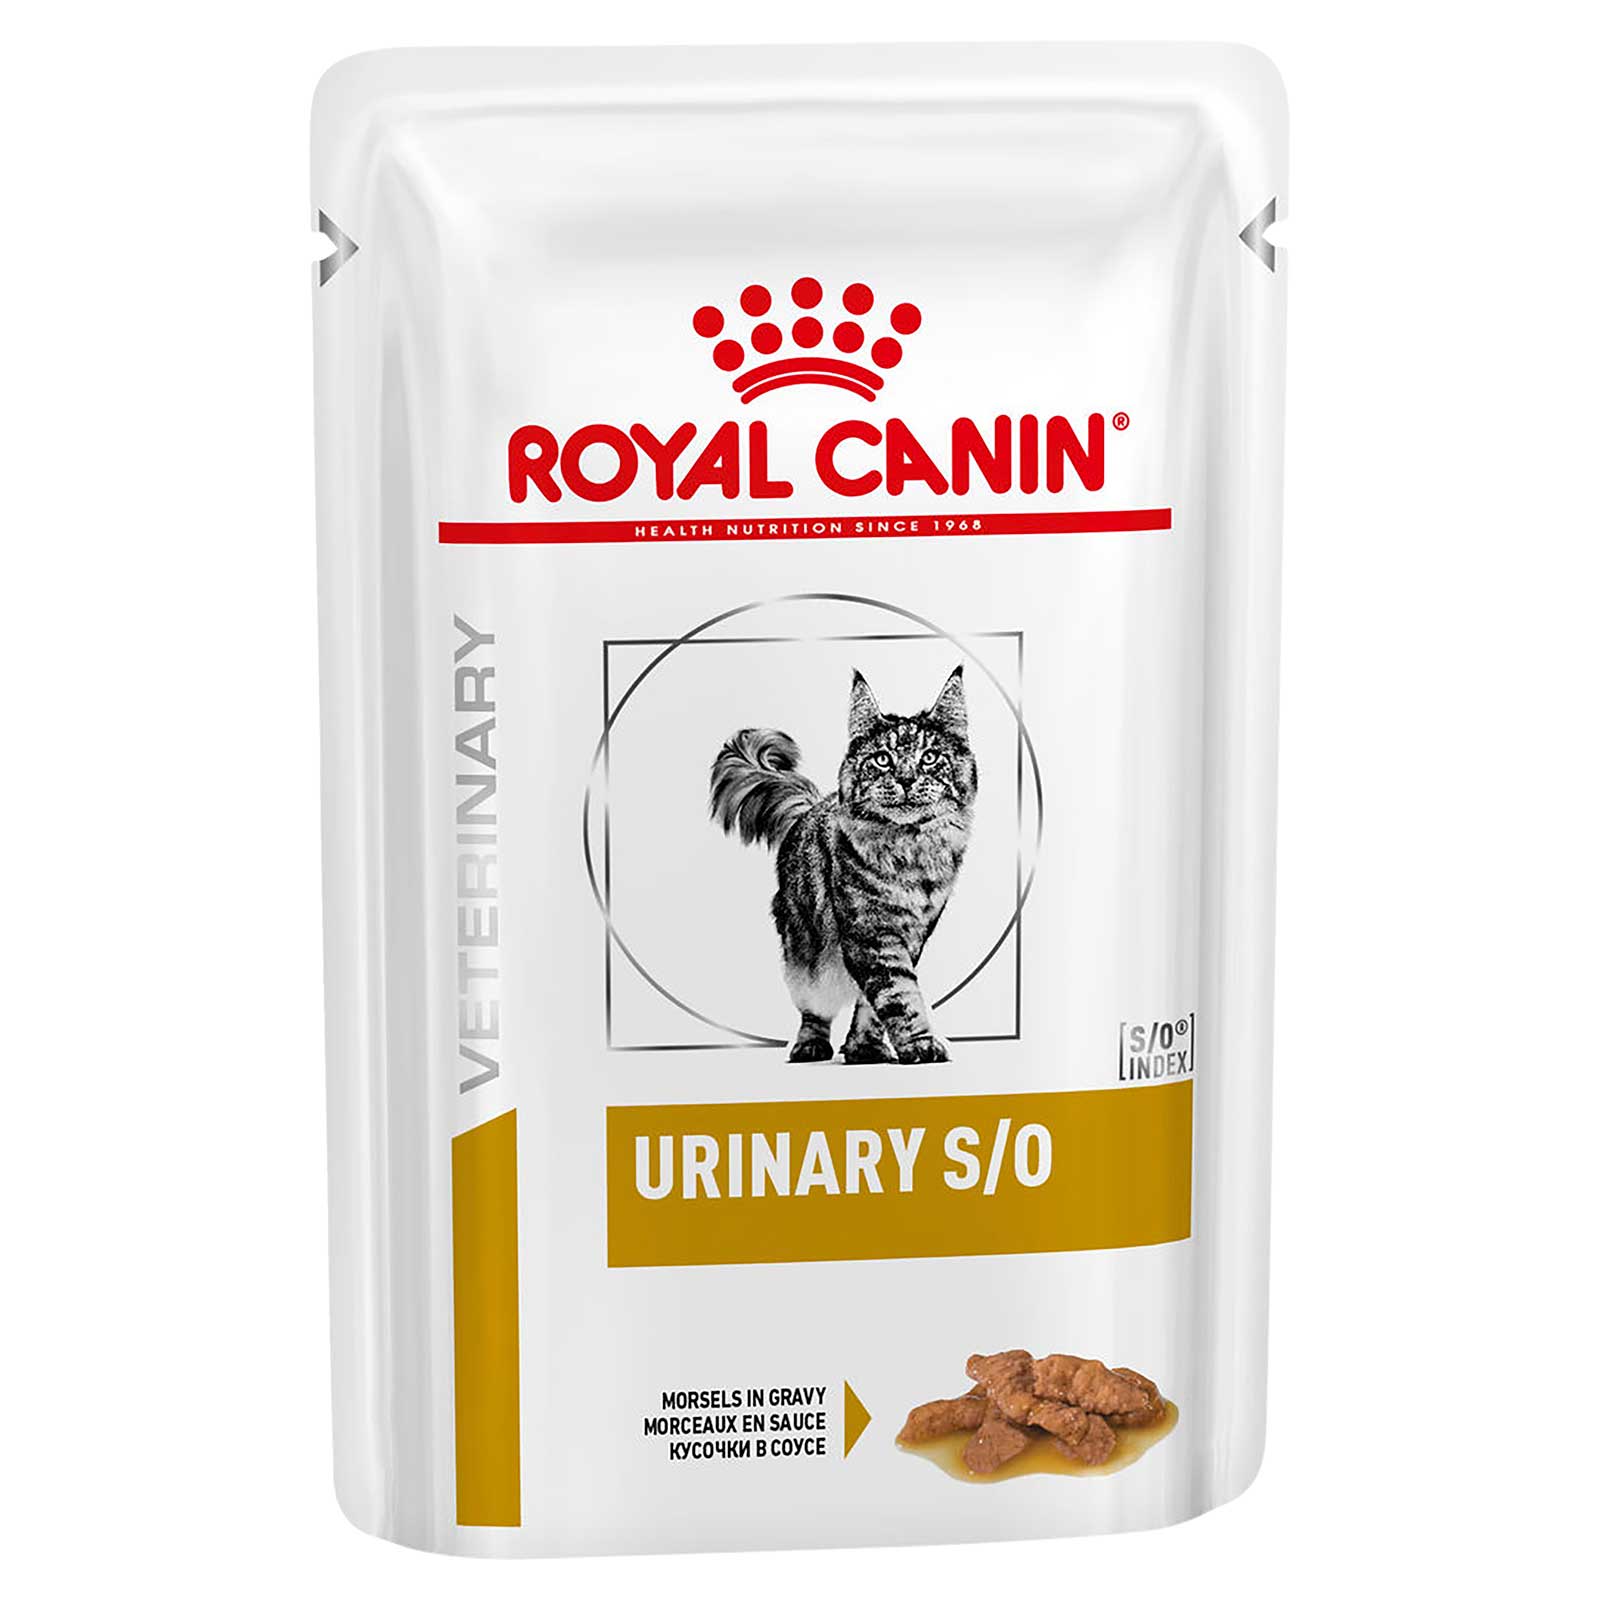 Royal Canin Veterinary Cat Food Pouch Urinary S/O